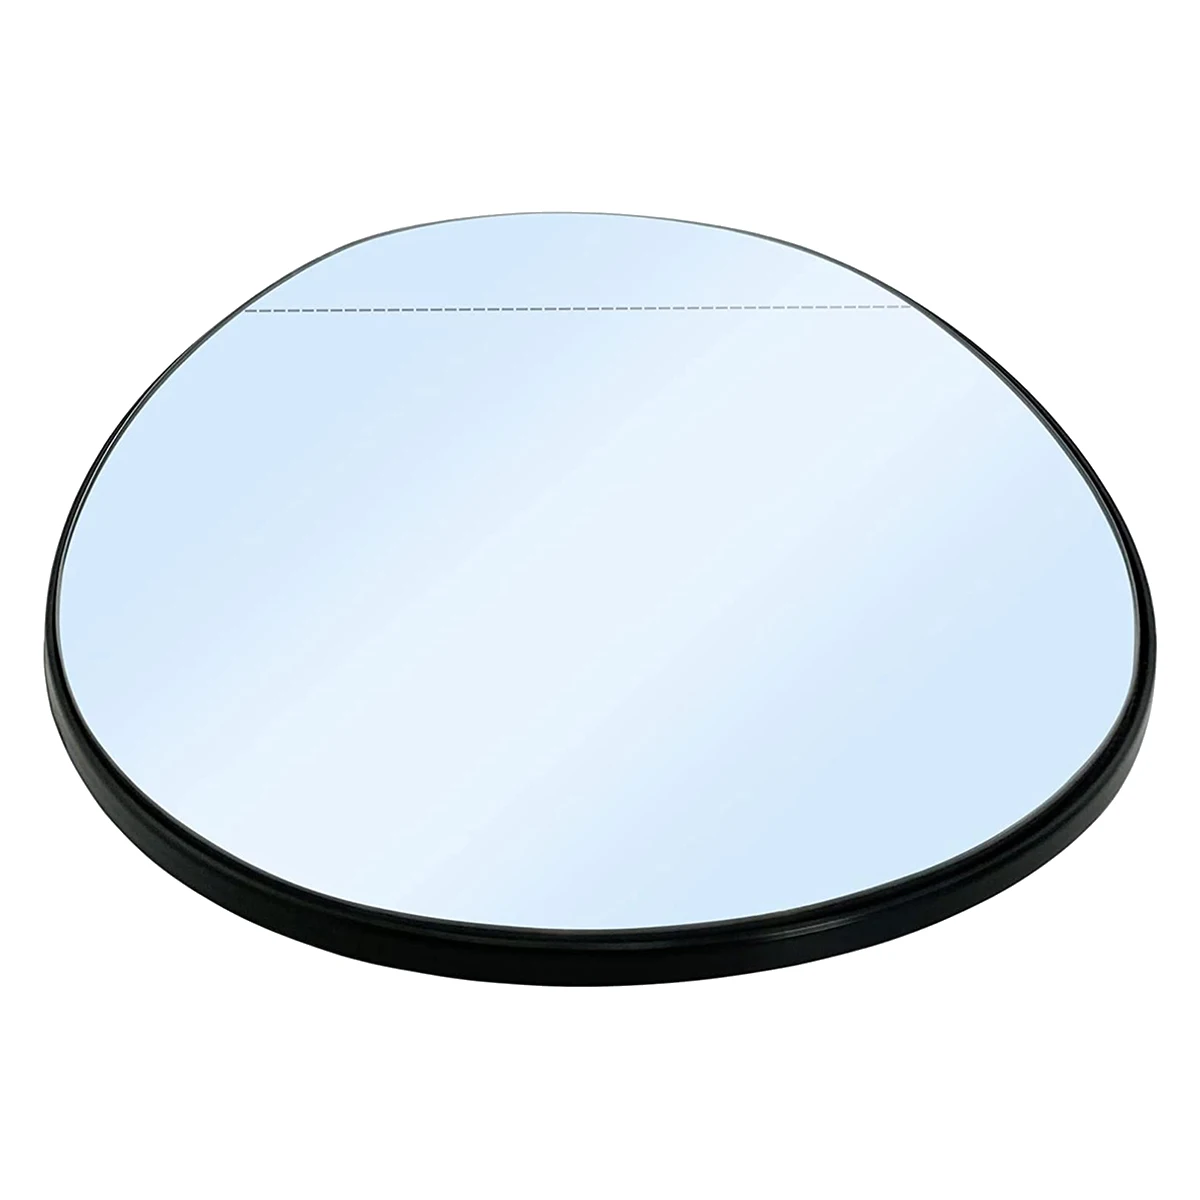 

Левое боковое зеркало заднего вида с подогревом для MINI CLUBMAN COOPER COUNTRYMAN R55 R56 R57 R58 R59 R60 R61 2007-2016